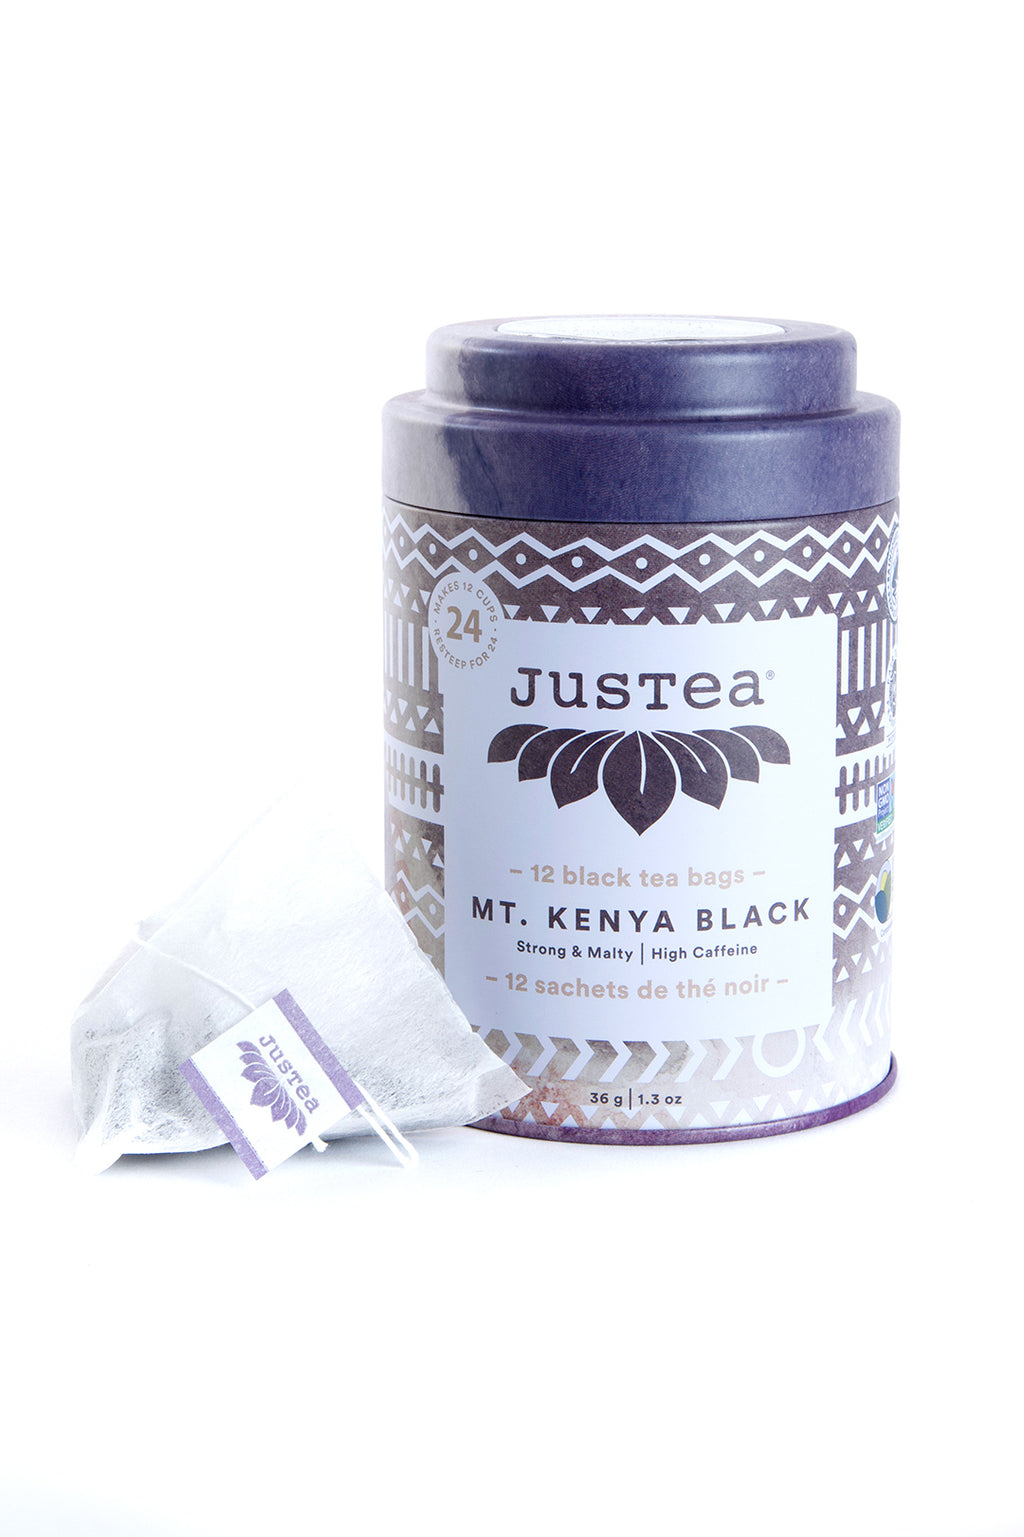 JusTea Mt. Kenya Black Tea Bags